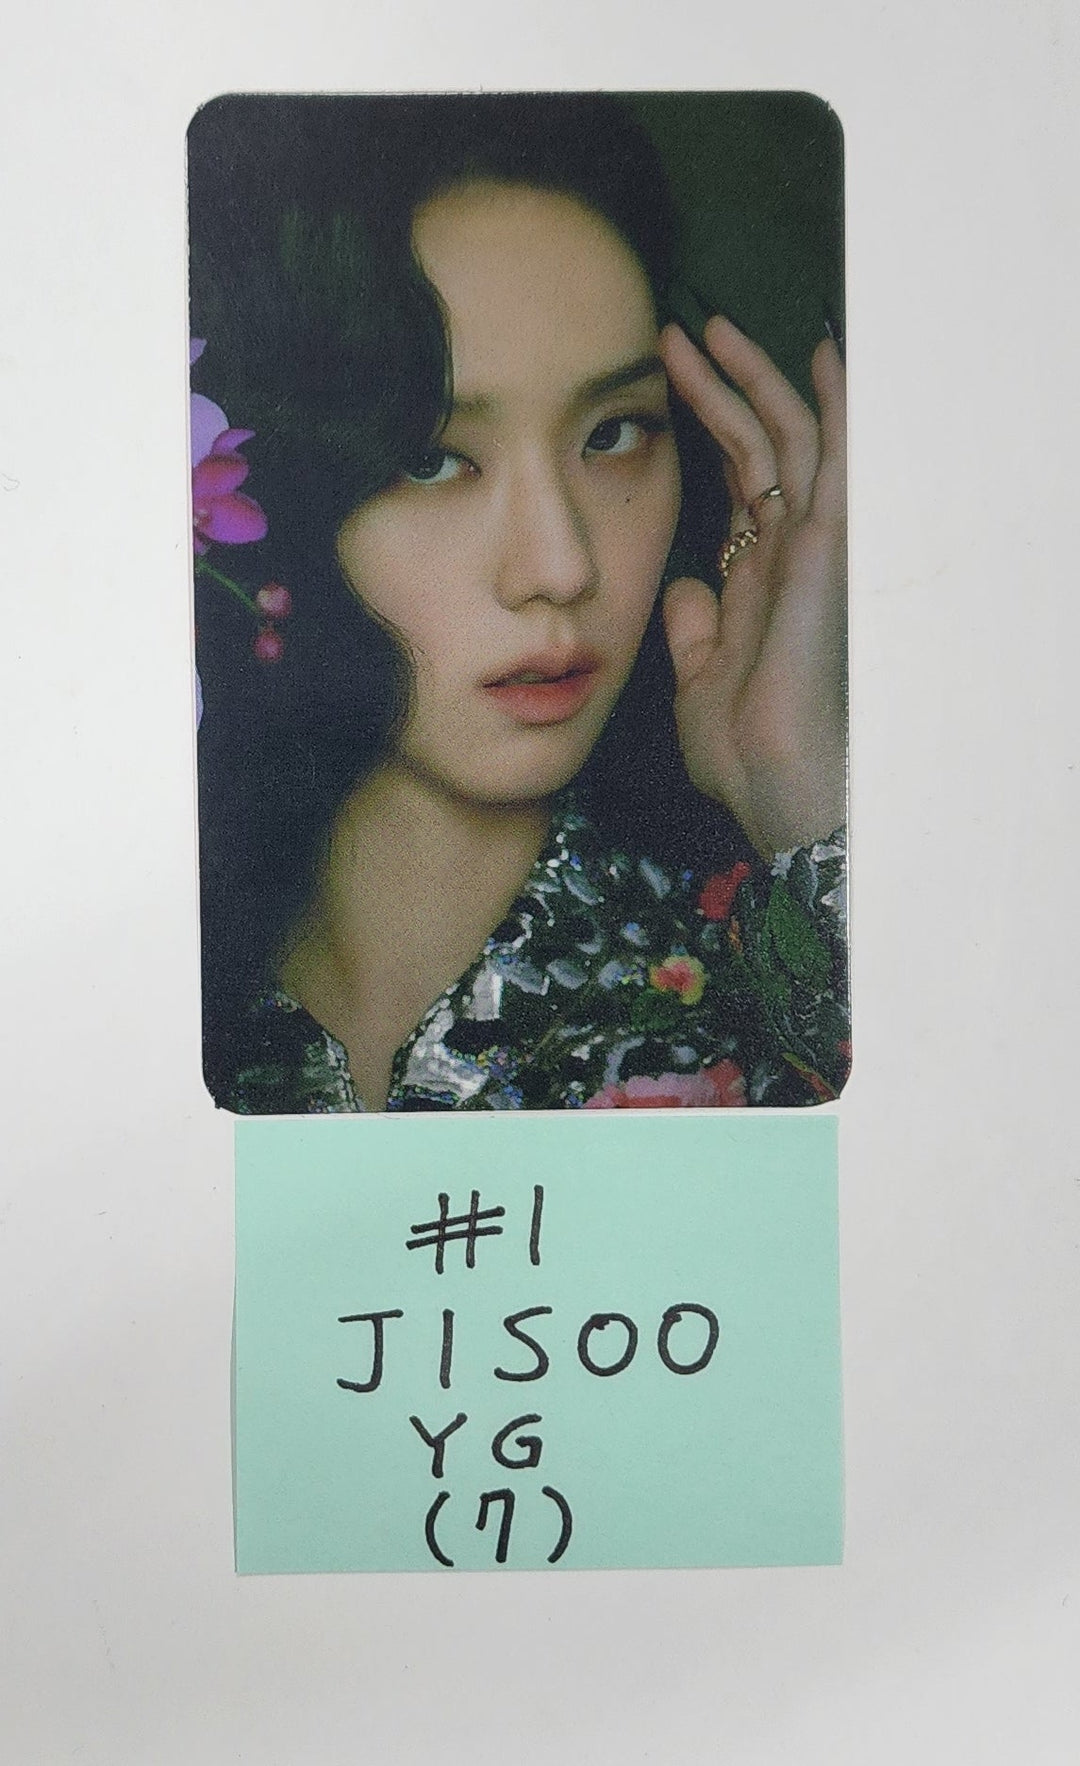 JISOO (Of Black Pink) "ME" 1st Single Album - YGセレクト予約特典フォトカード [5/15再入荷]